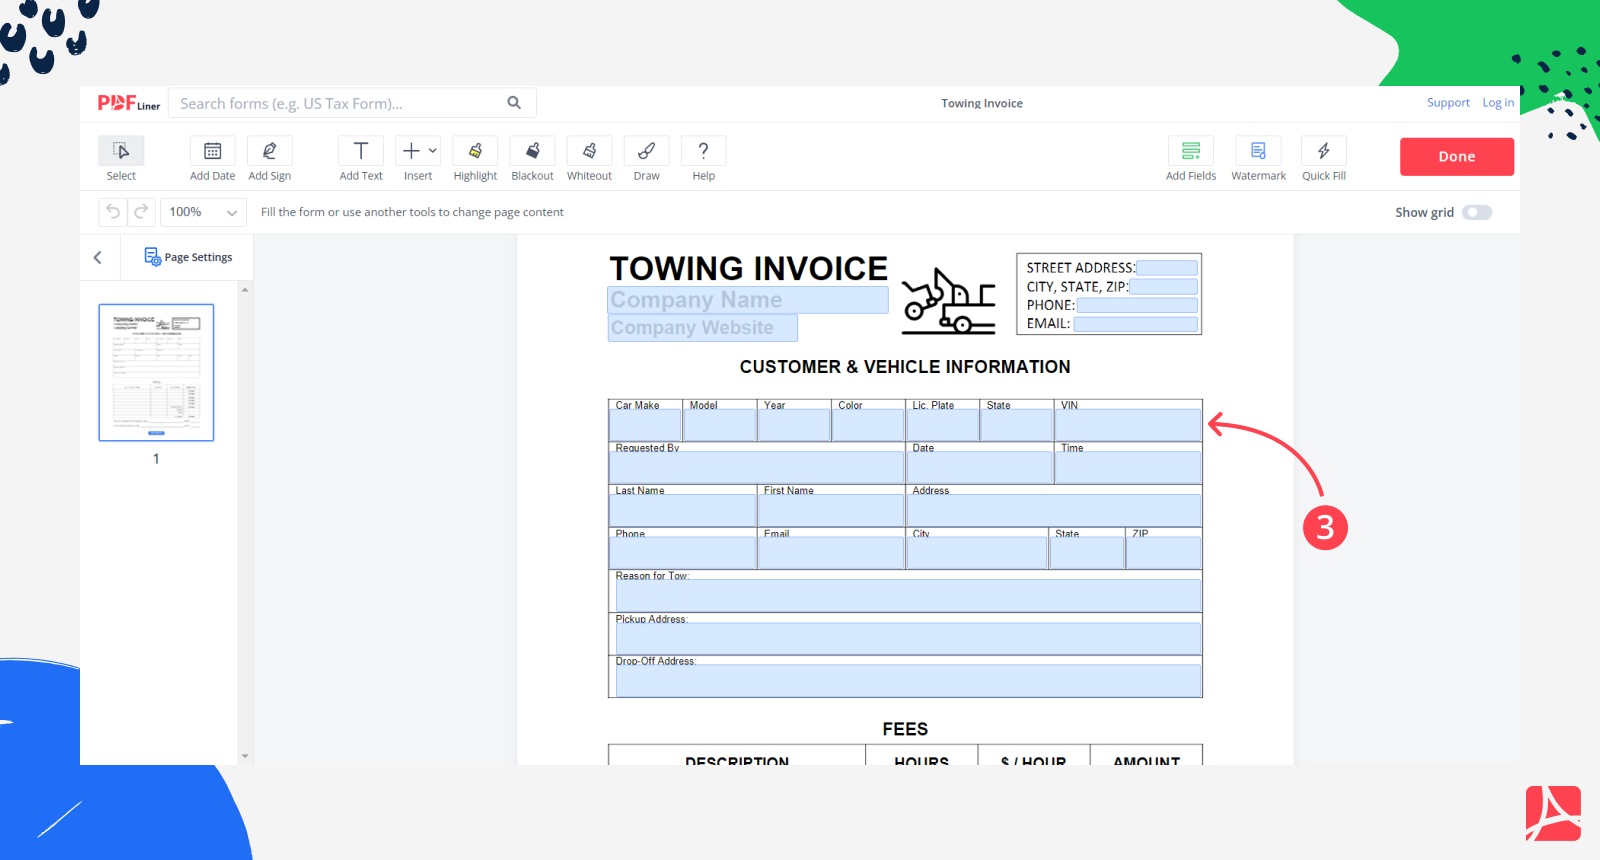 Towing Invoice screenshot step 3